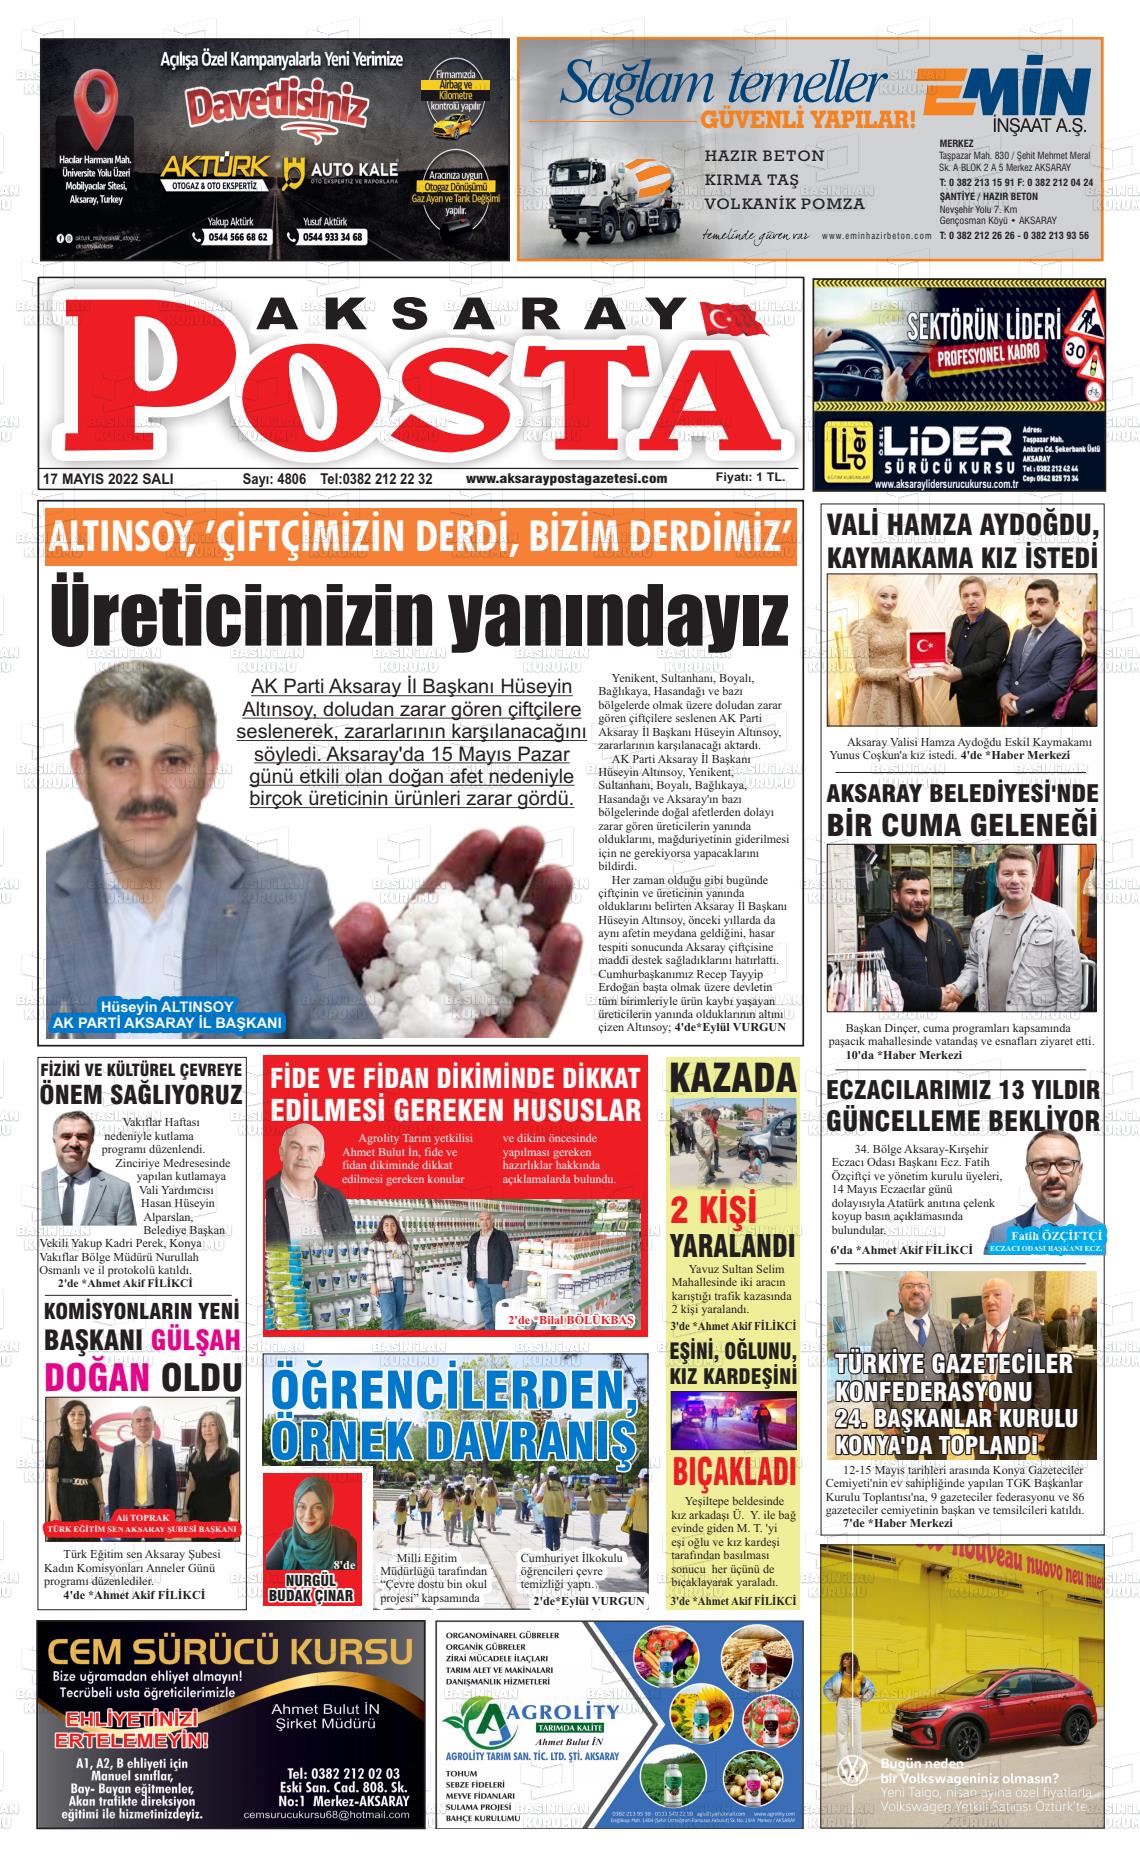 17 Mayıs 2022 Aksaray Posta Gazete Manşeti